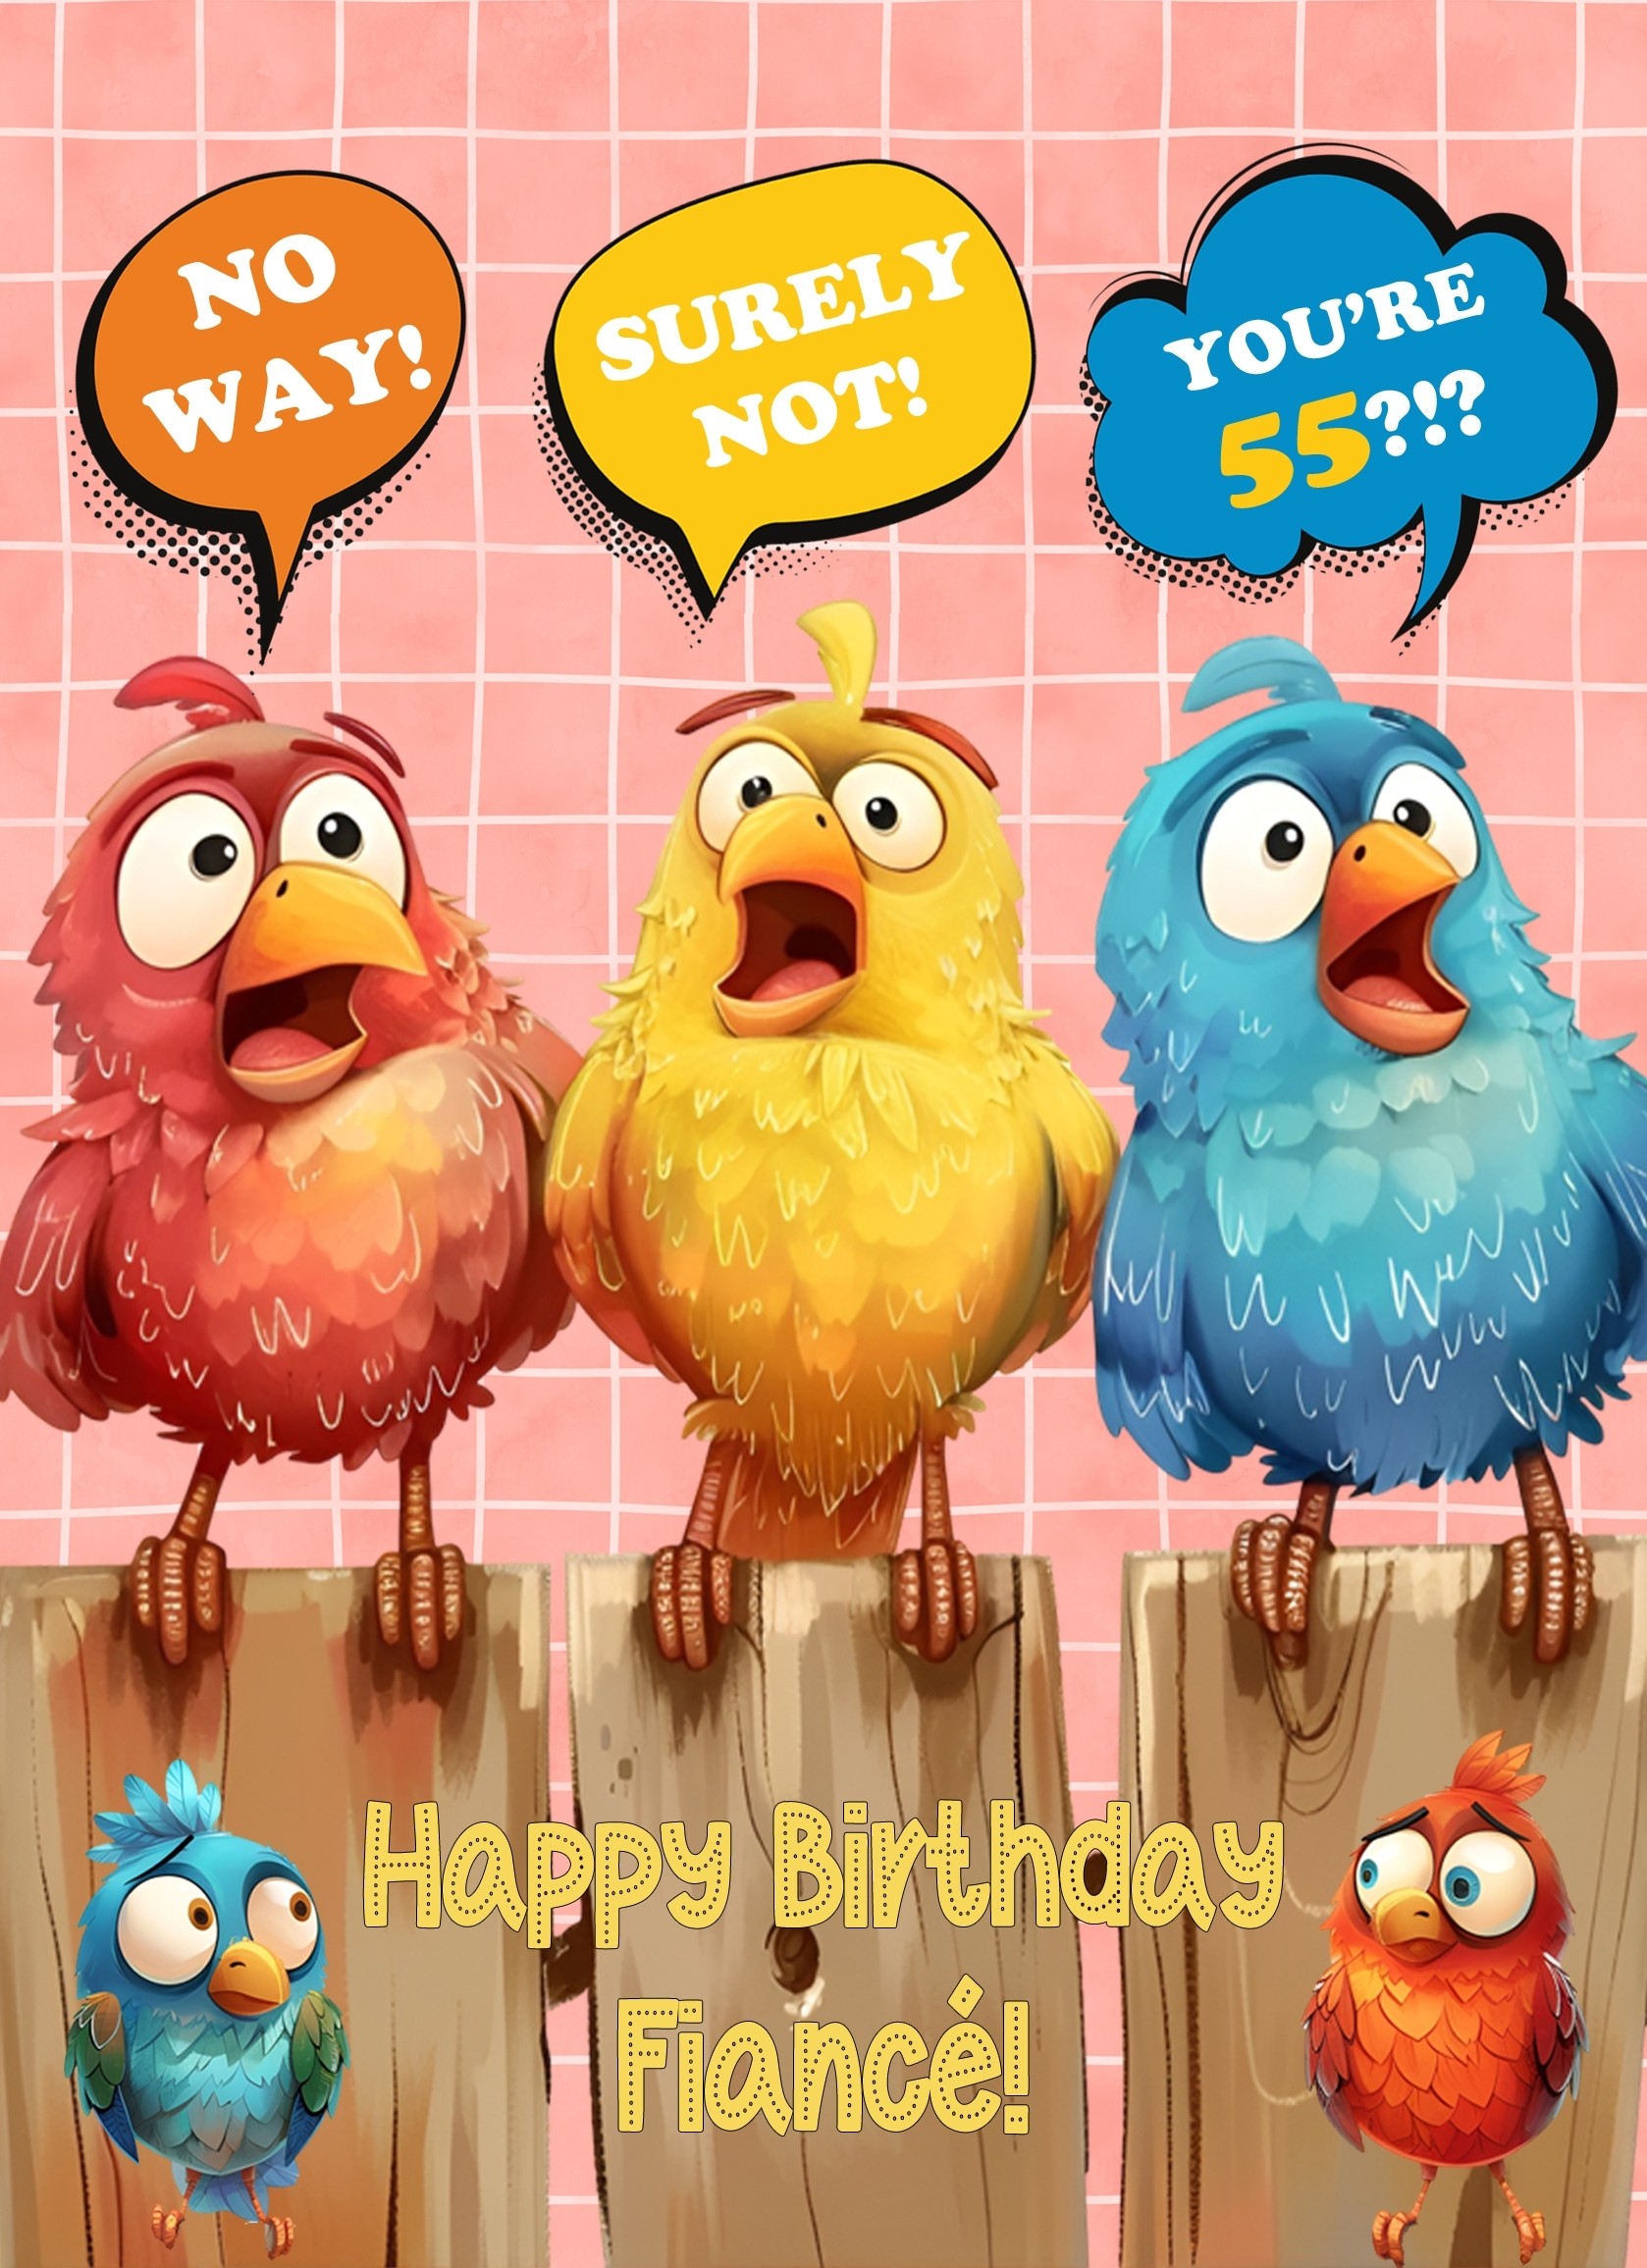 Fiance 55th Birthday Card (Funny Birds Surprised)